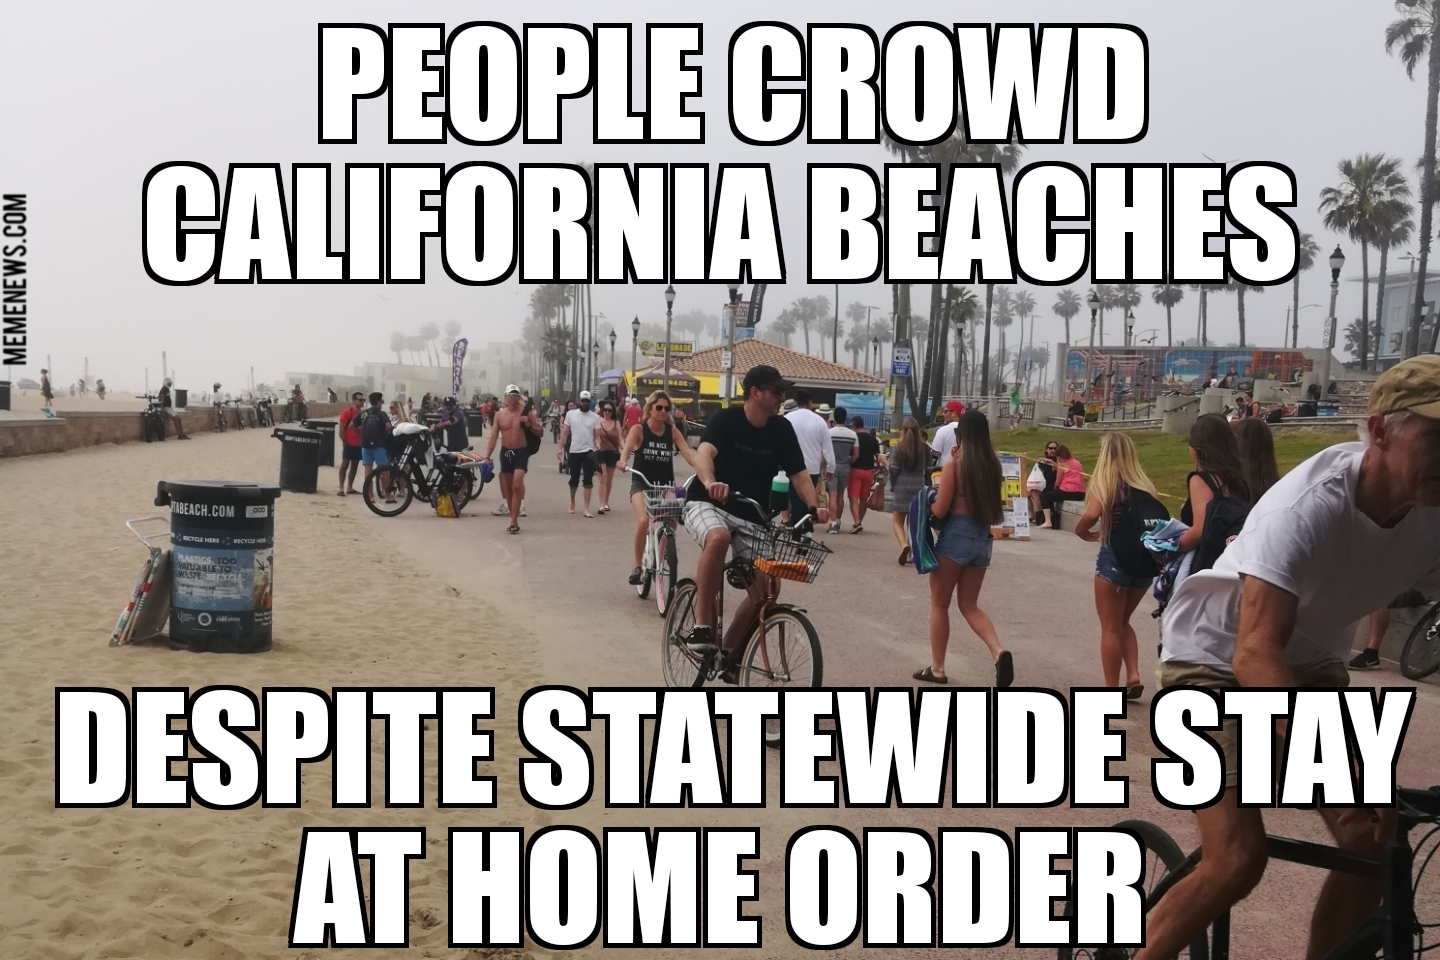 People crowd California beaches